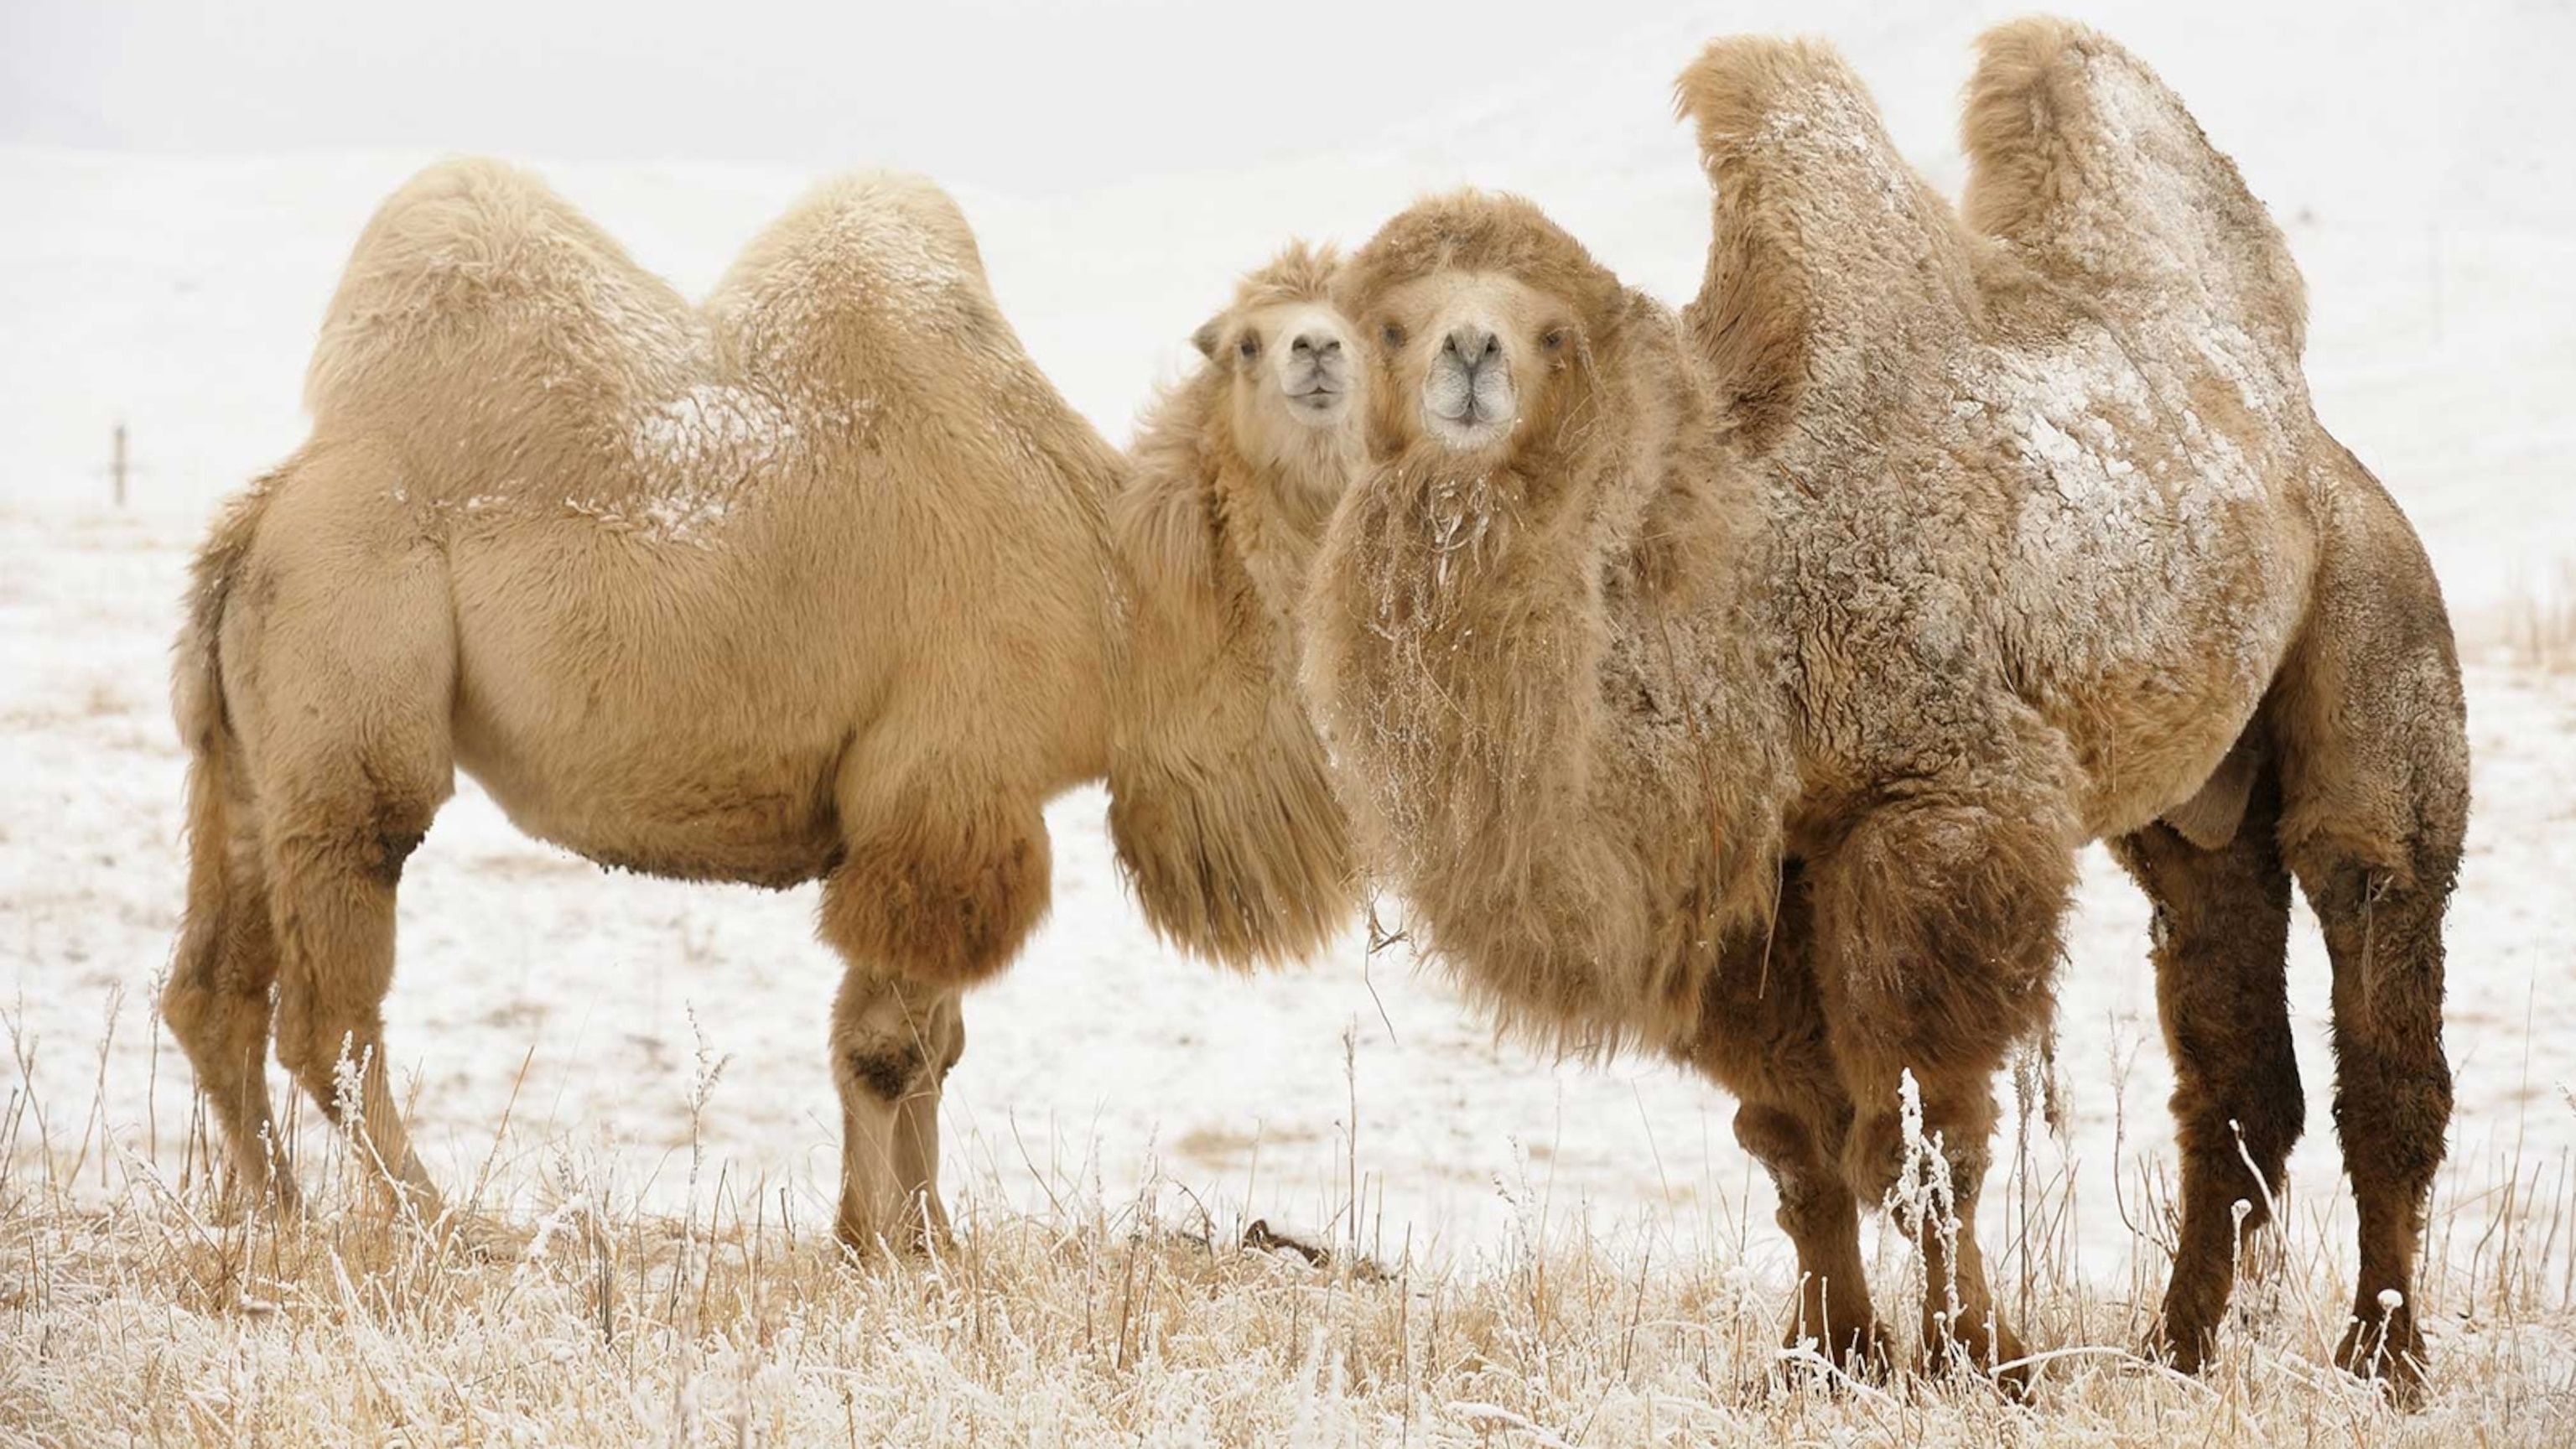 Bactrian camel wallpapers, Desert scenery, 3080x1730 HD Desktop